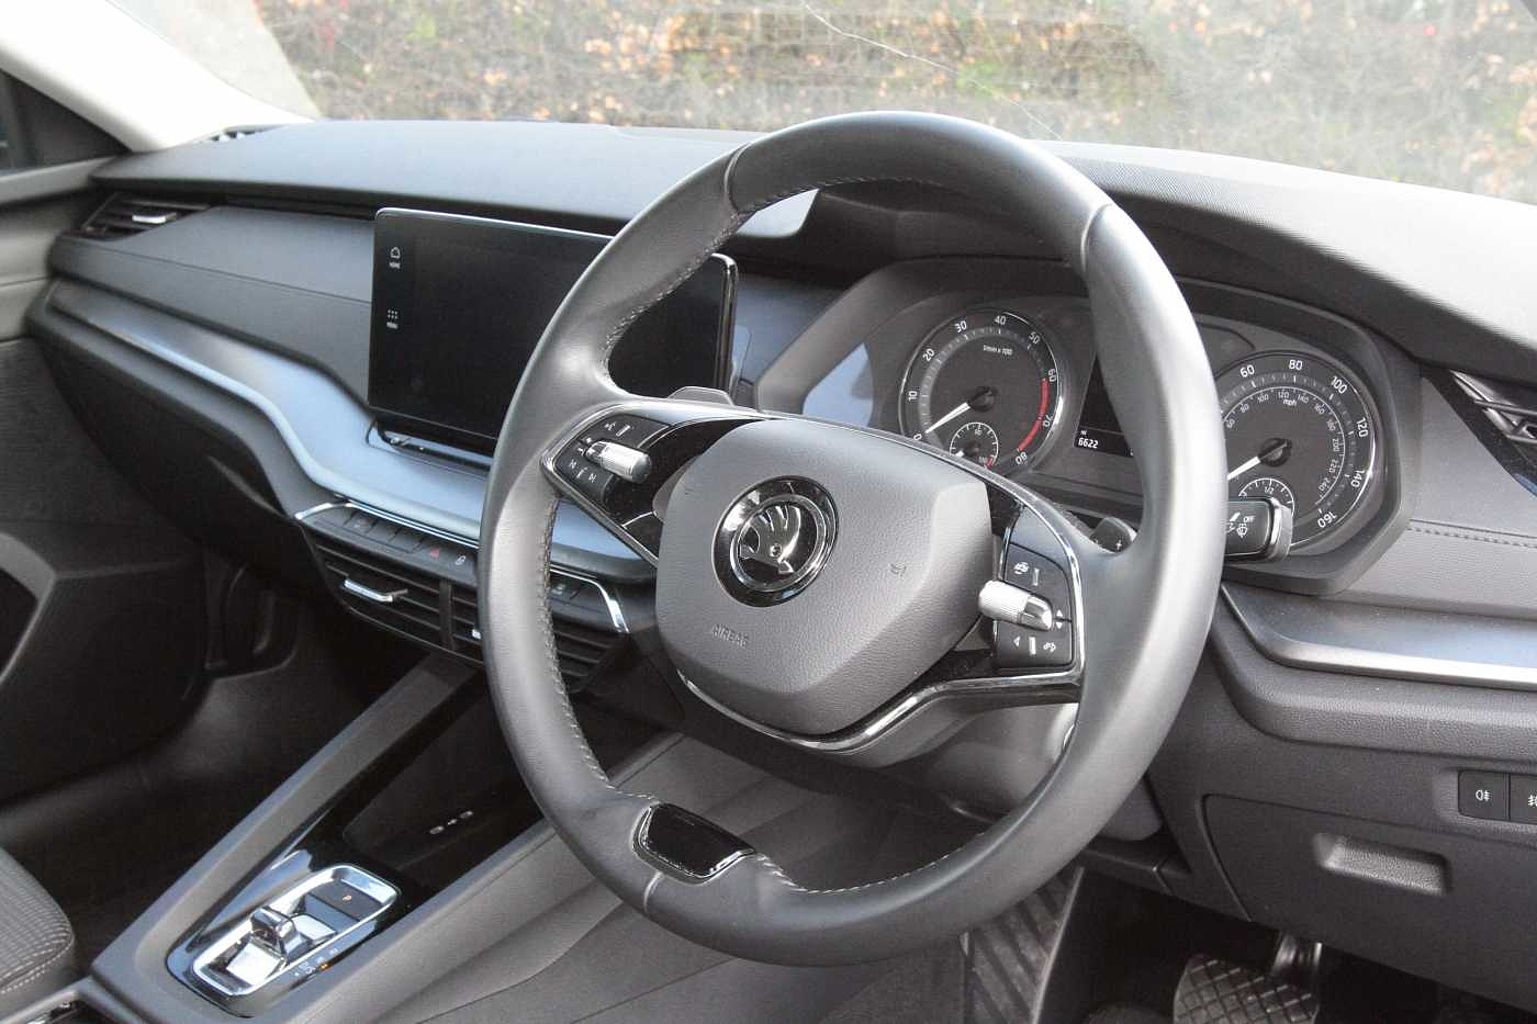 SKODA Octavia Hatch 1.0 TSI e-TEC (110ps) SE Auto/DSG Hatchback